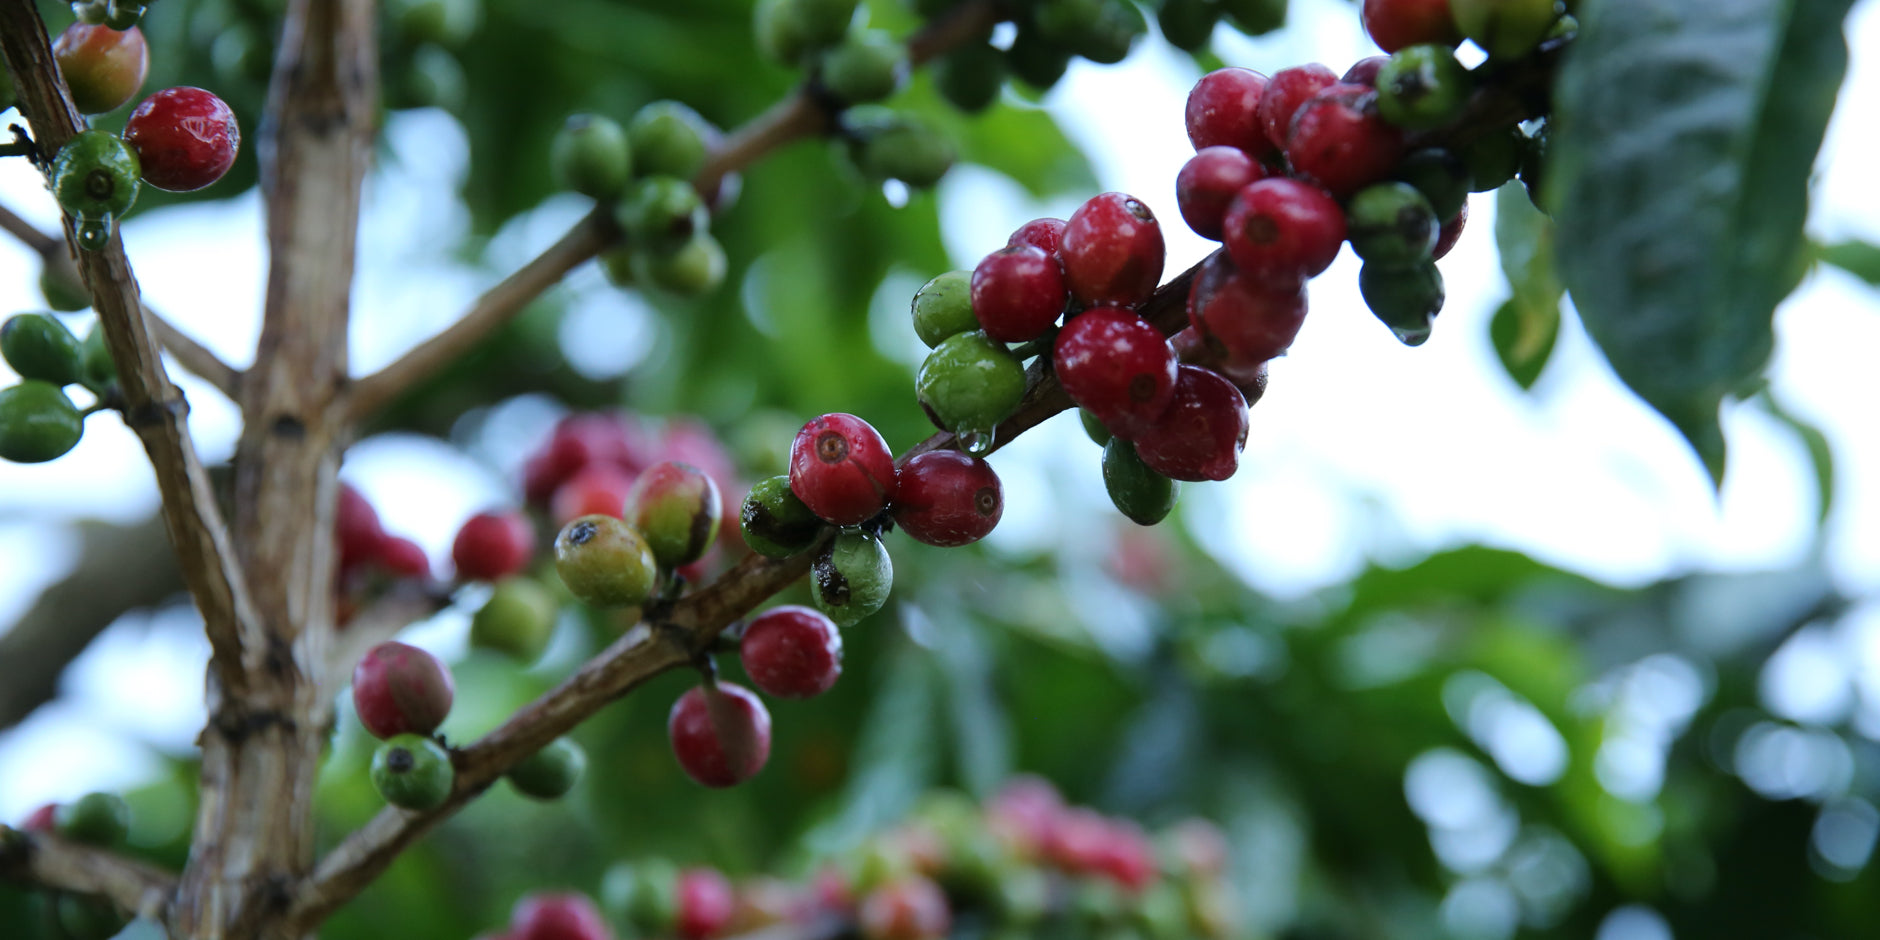 Ripe coffee cherries on the tree